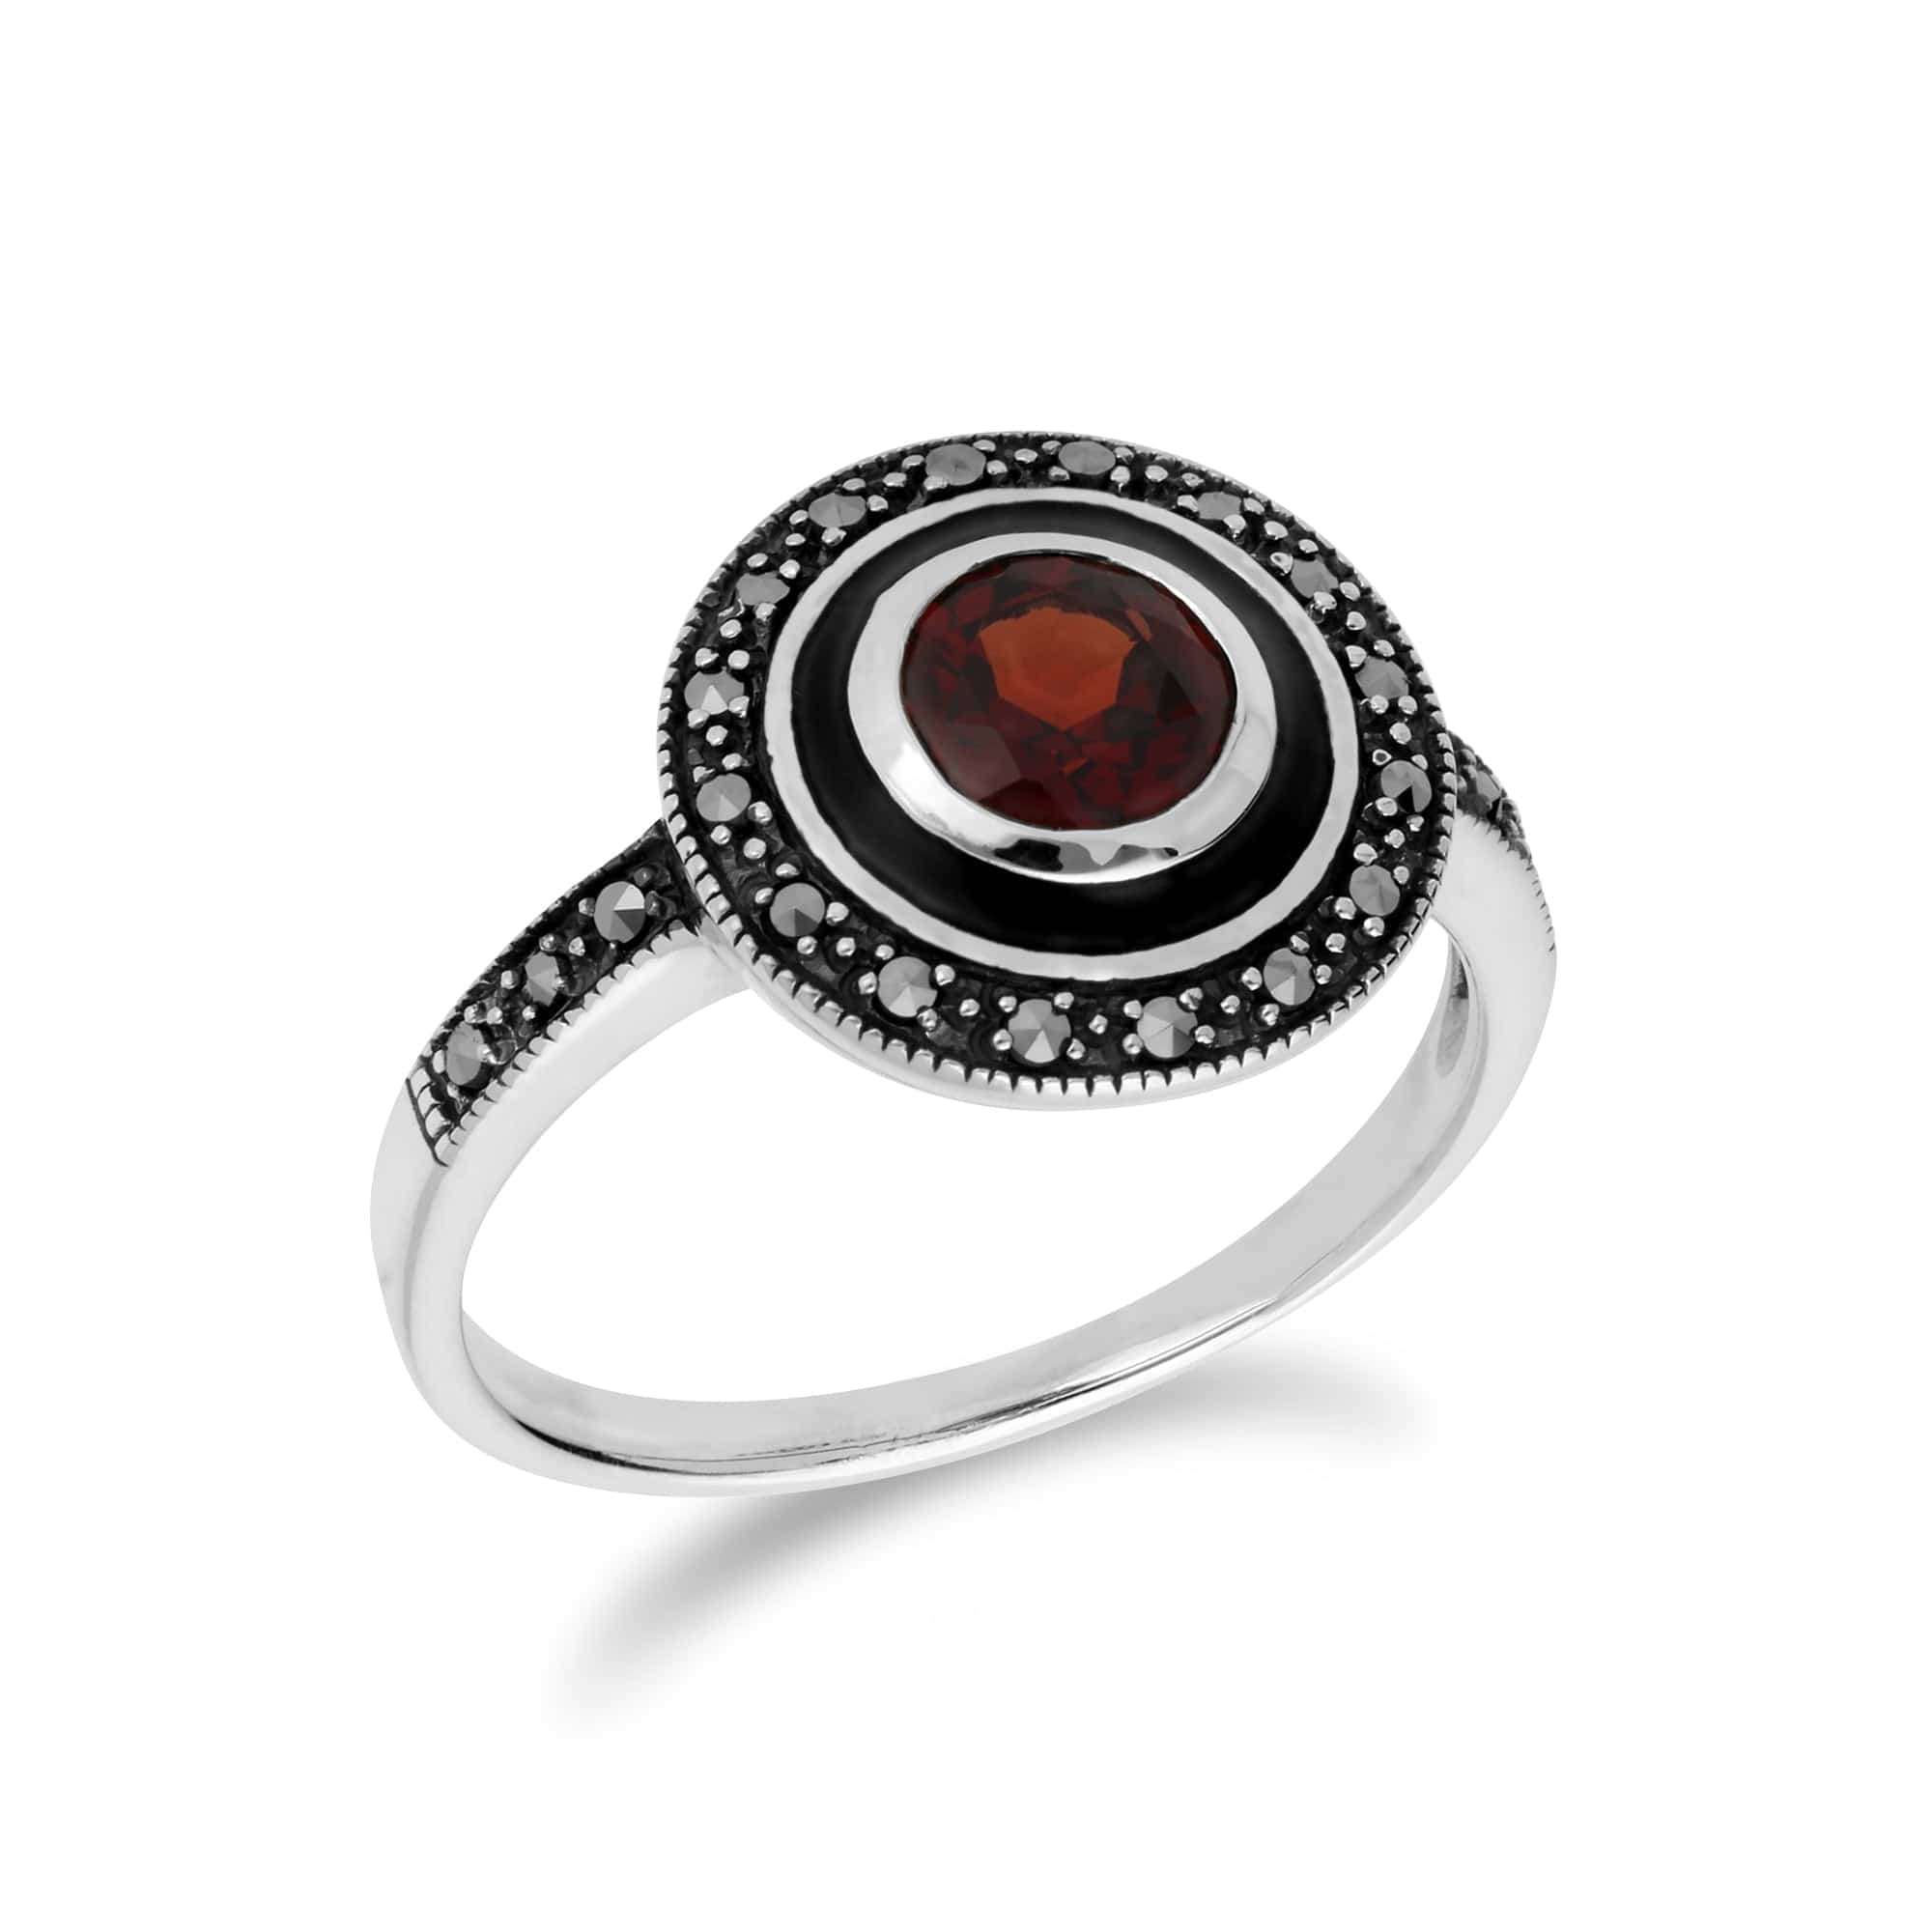 214R599603925 Art Deco Style Round Garnet & Black Enamel Halo Ring in 925 Sterling Silver 2